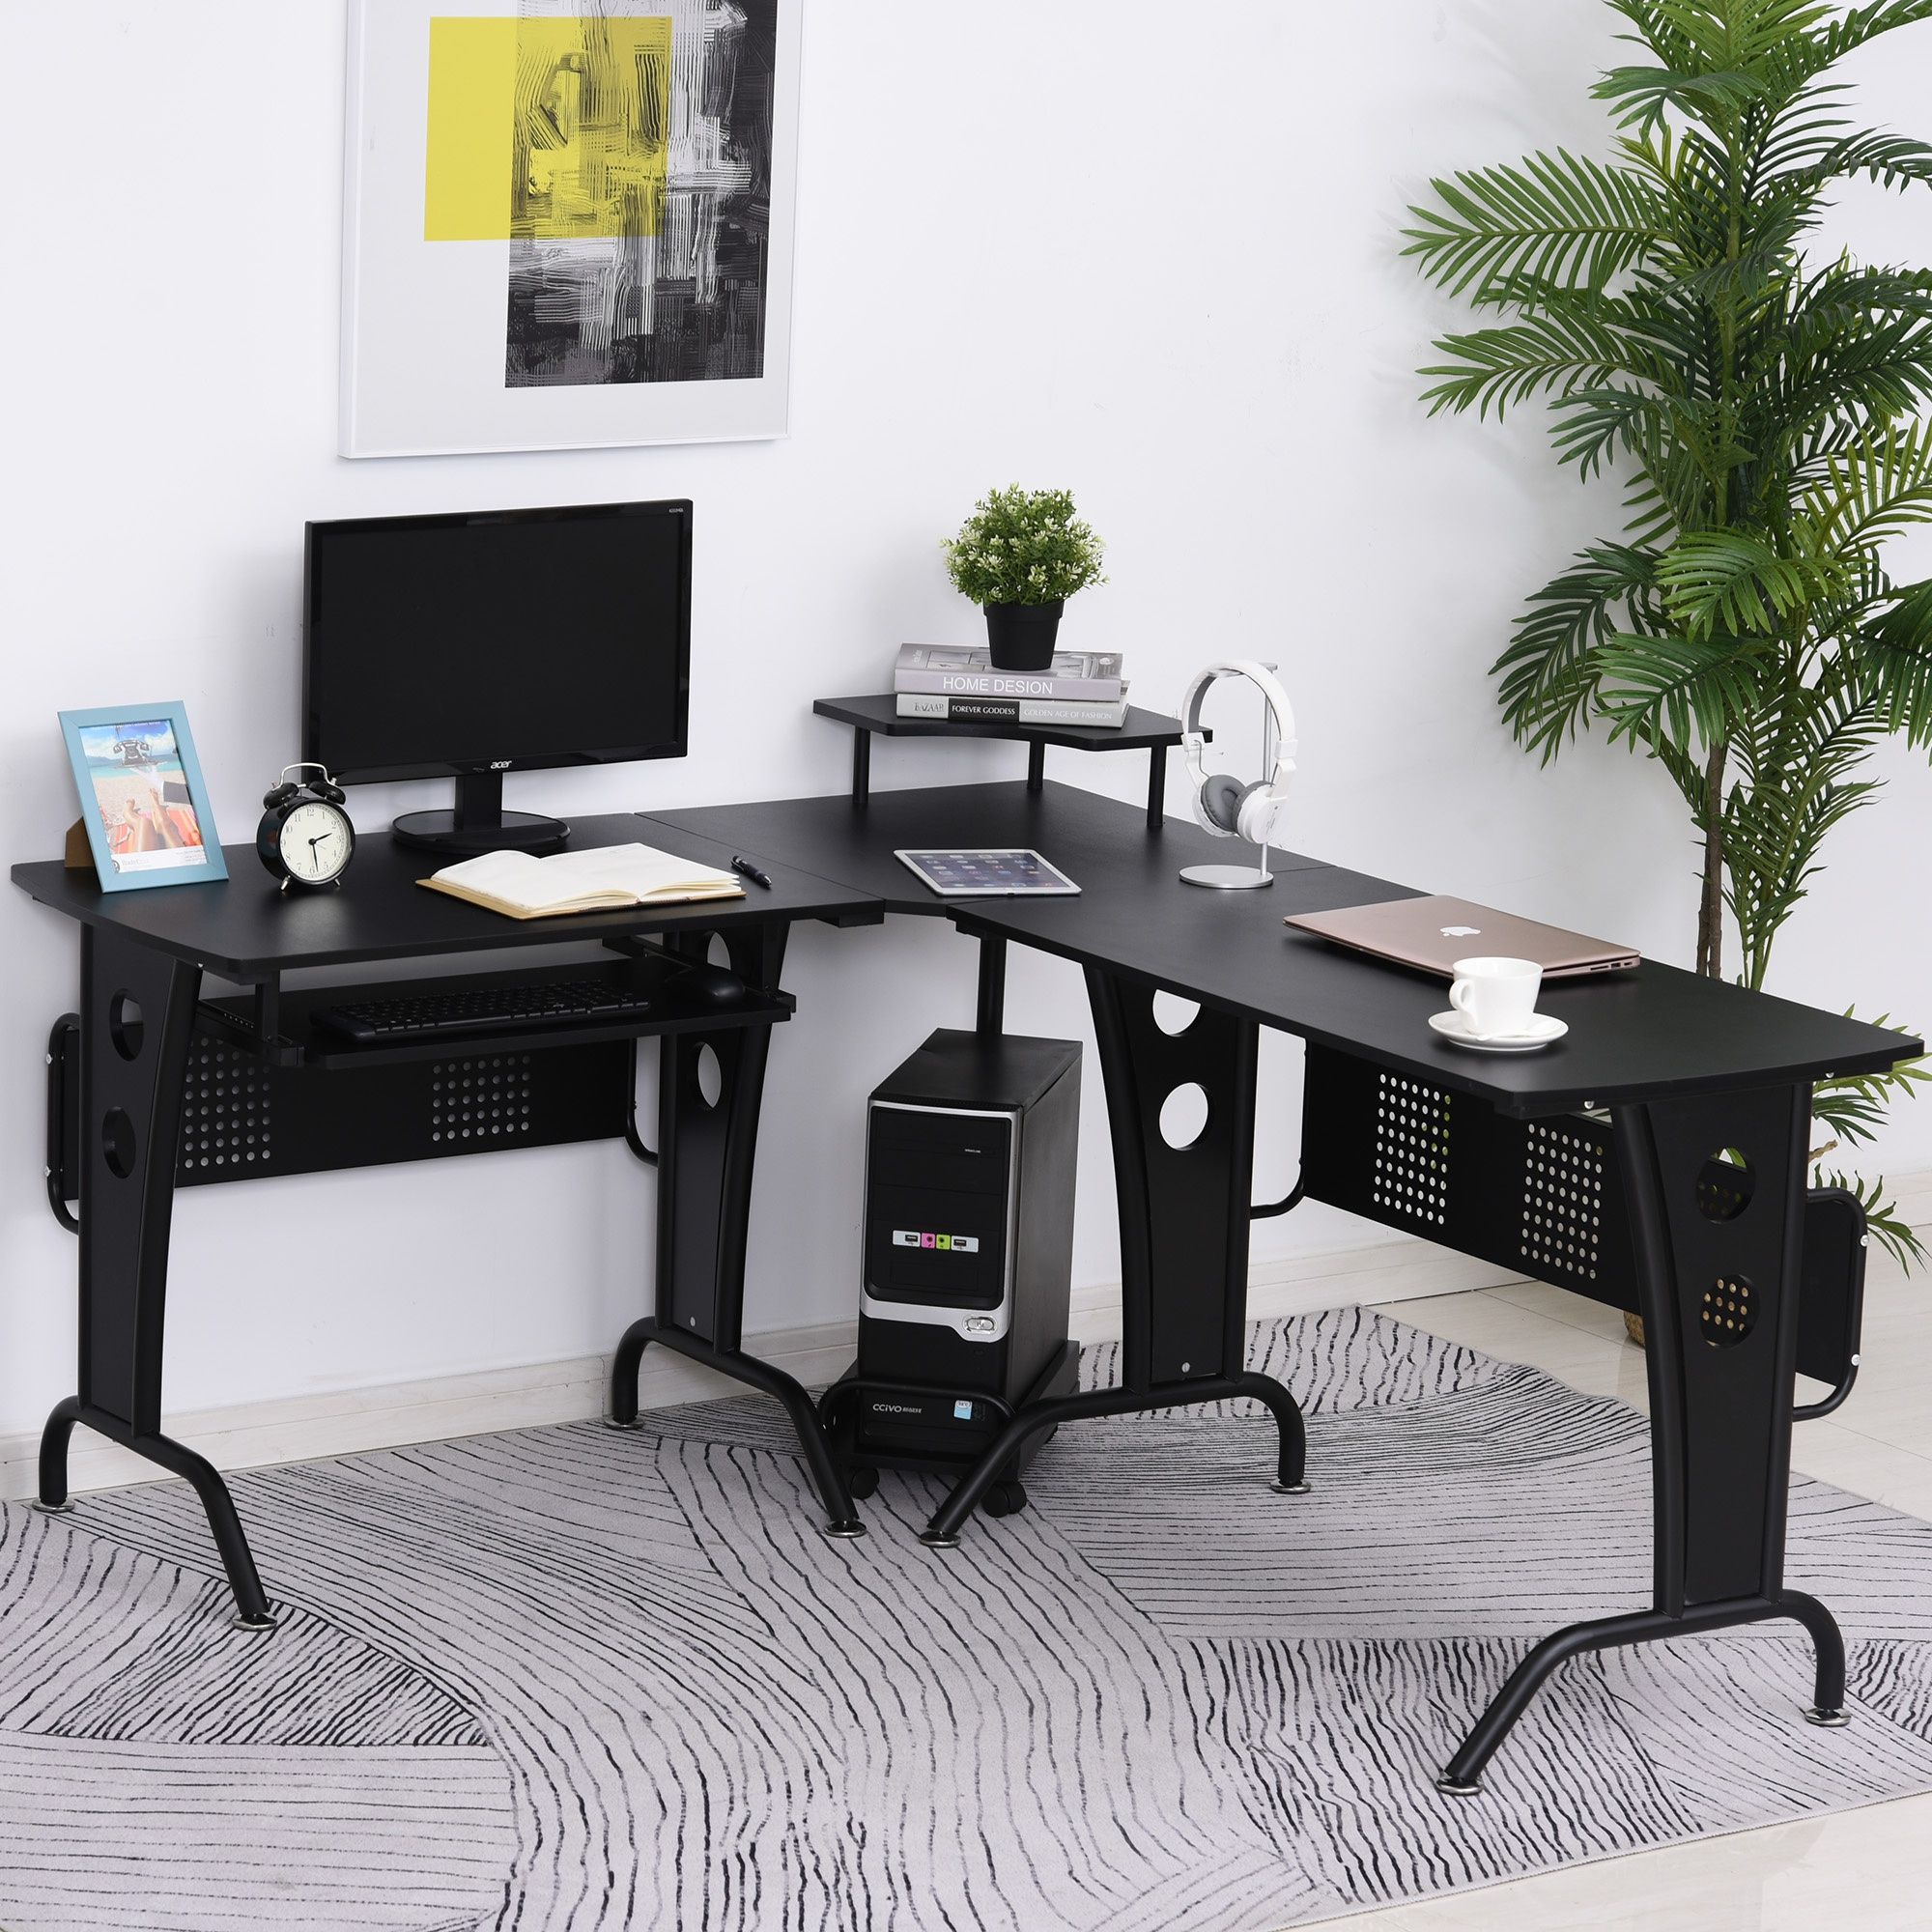 Homcom Steel Mdf Top L Shaped Corner Desk W/ Keyboard Tray Black Throughout Natural Wood And Black Metal Office Desks (View 7 of 15)